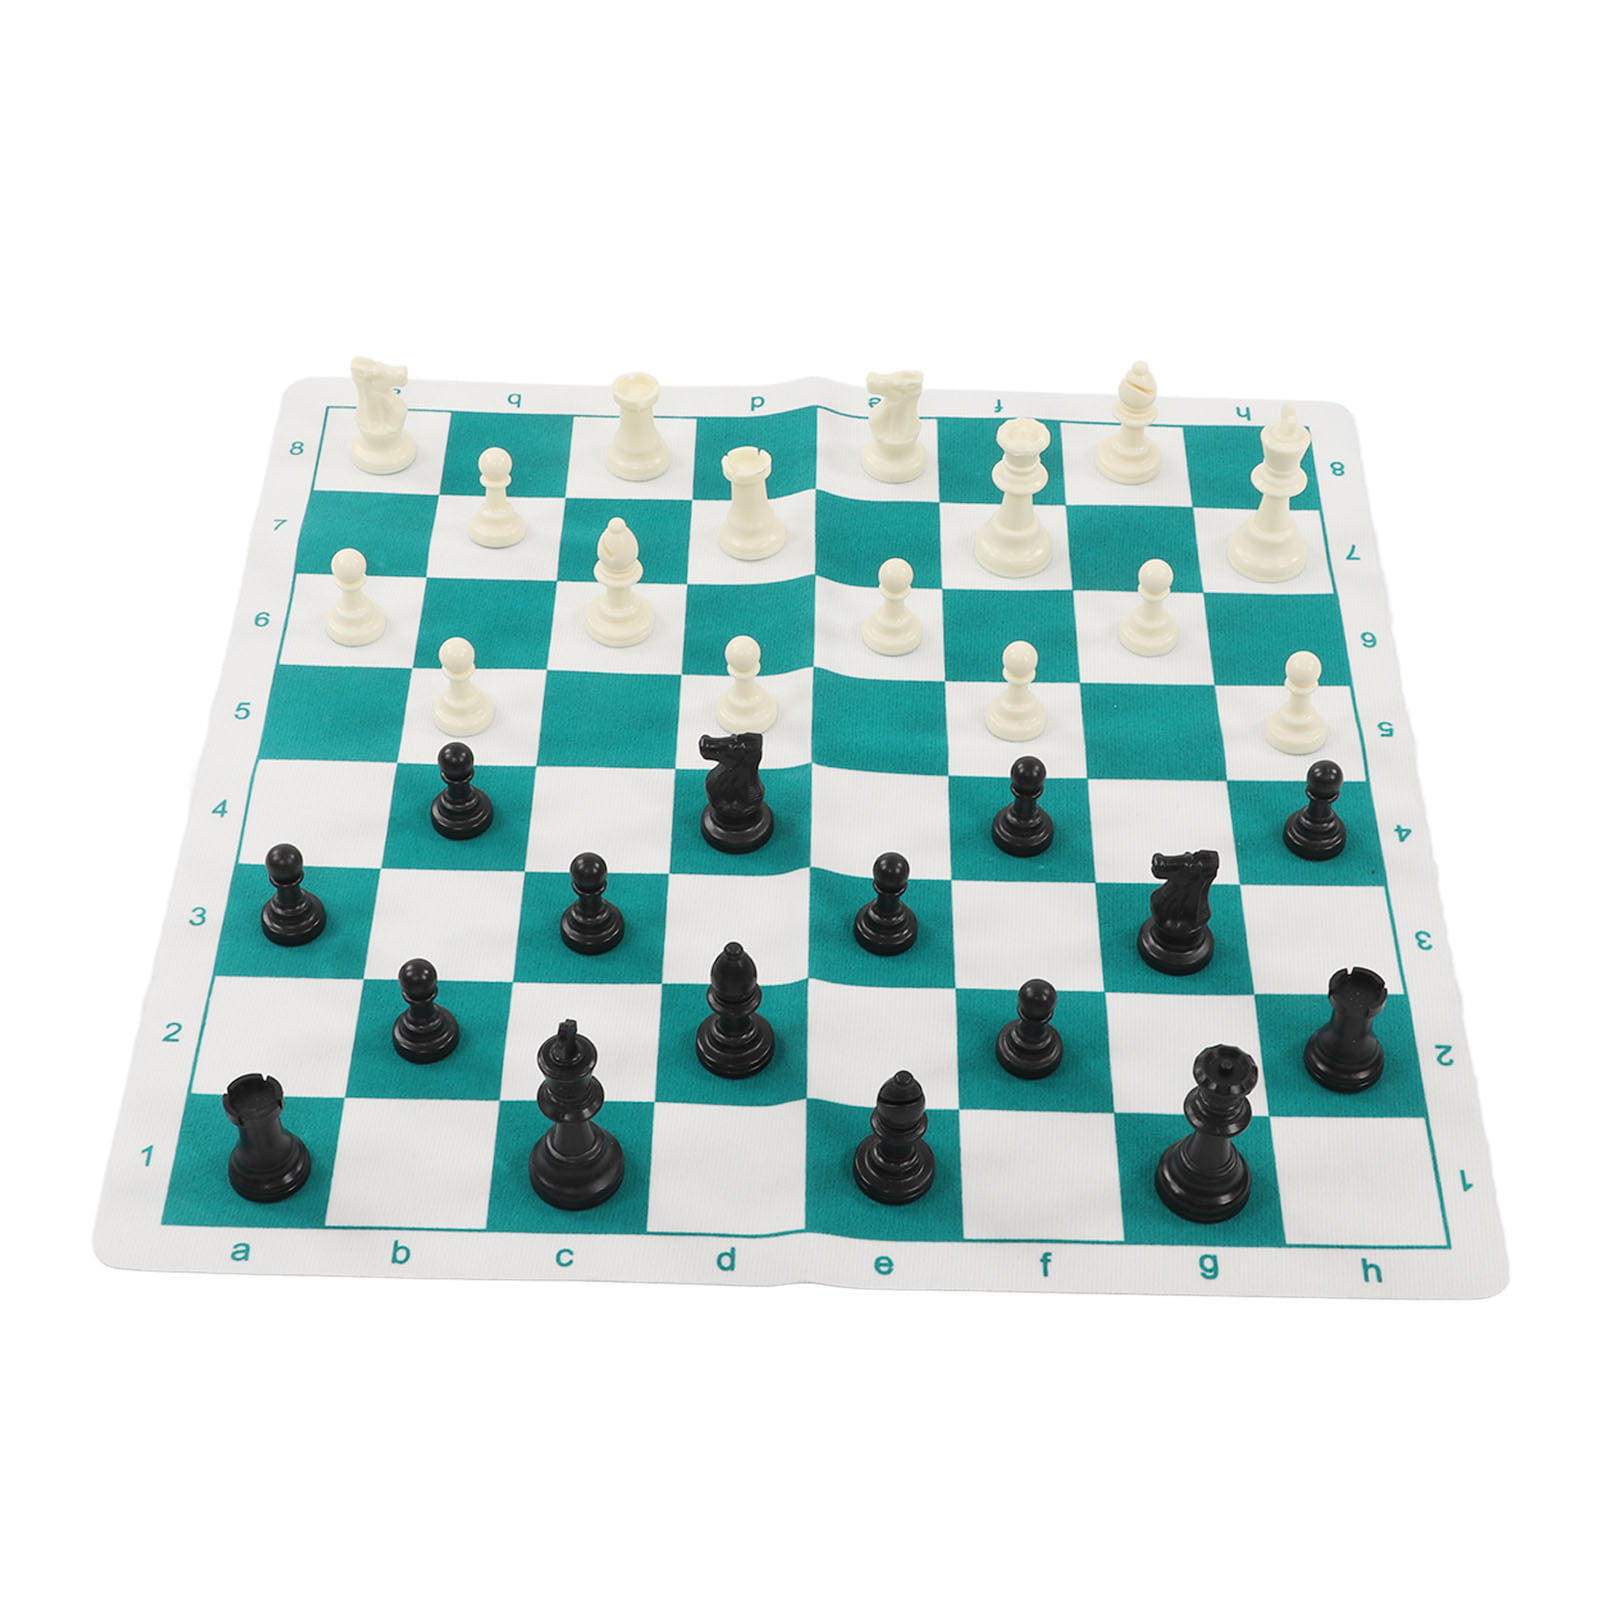 Portable Chess Board Travel Board Game PVC Mat Table Game Children Family Fun KV 